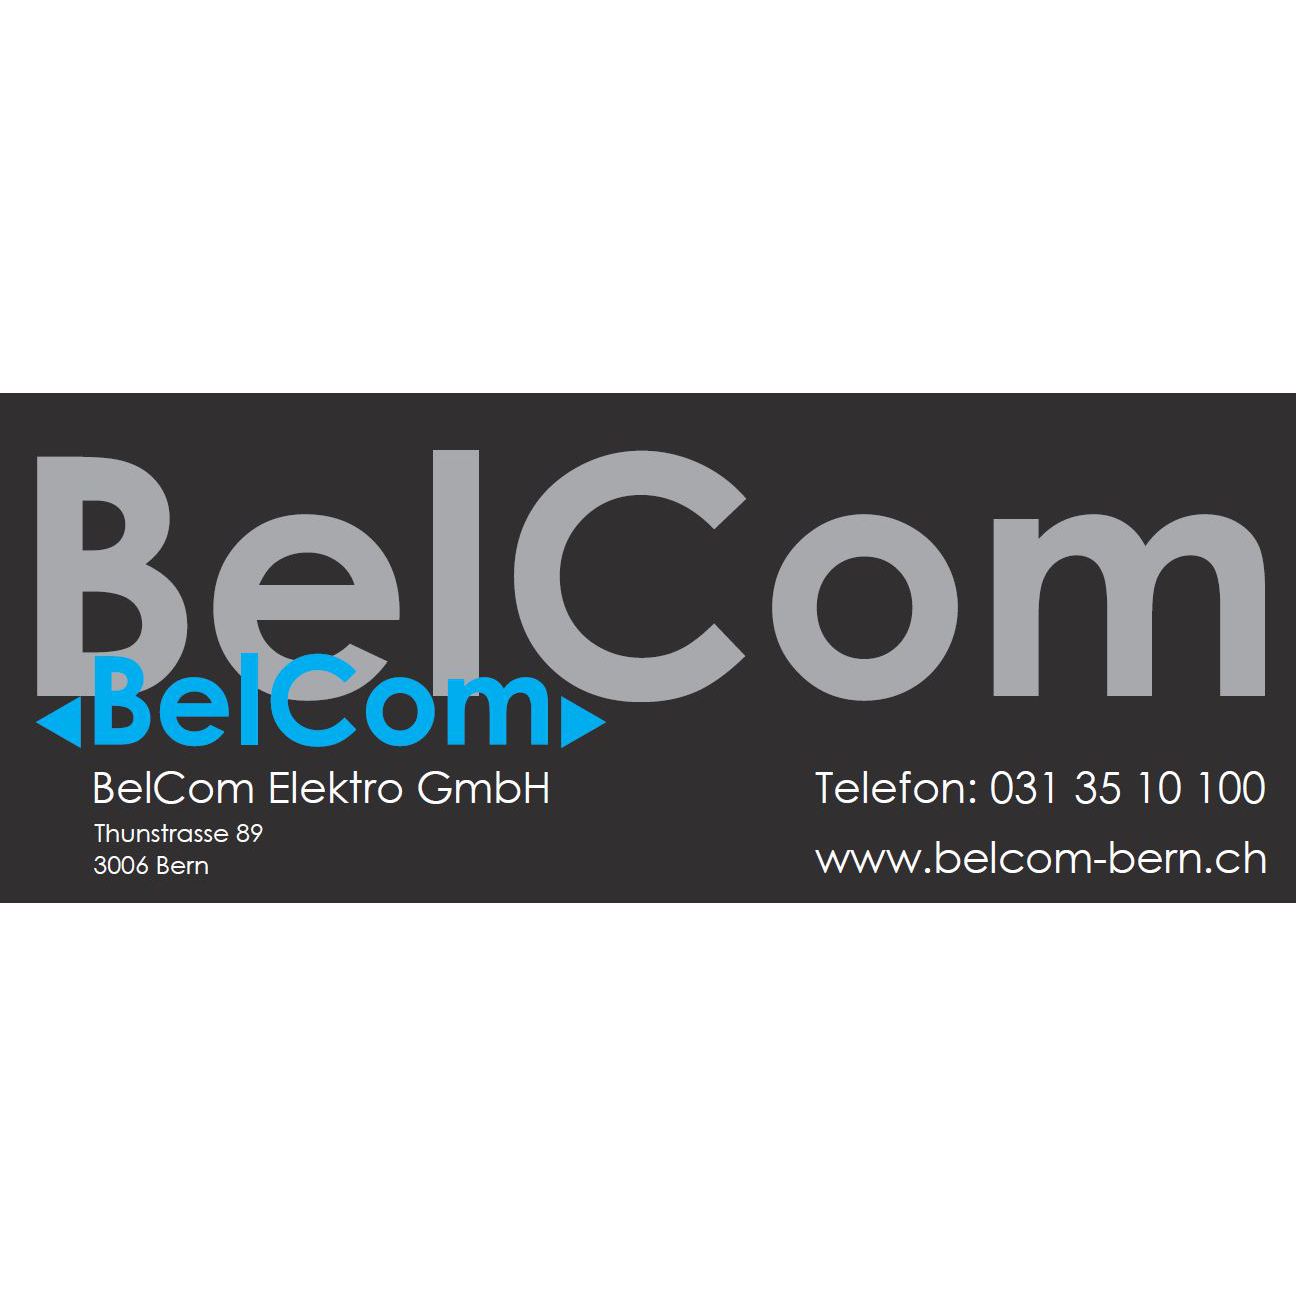 Belcom Elektro GmbH